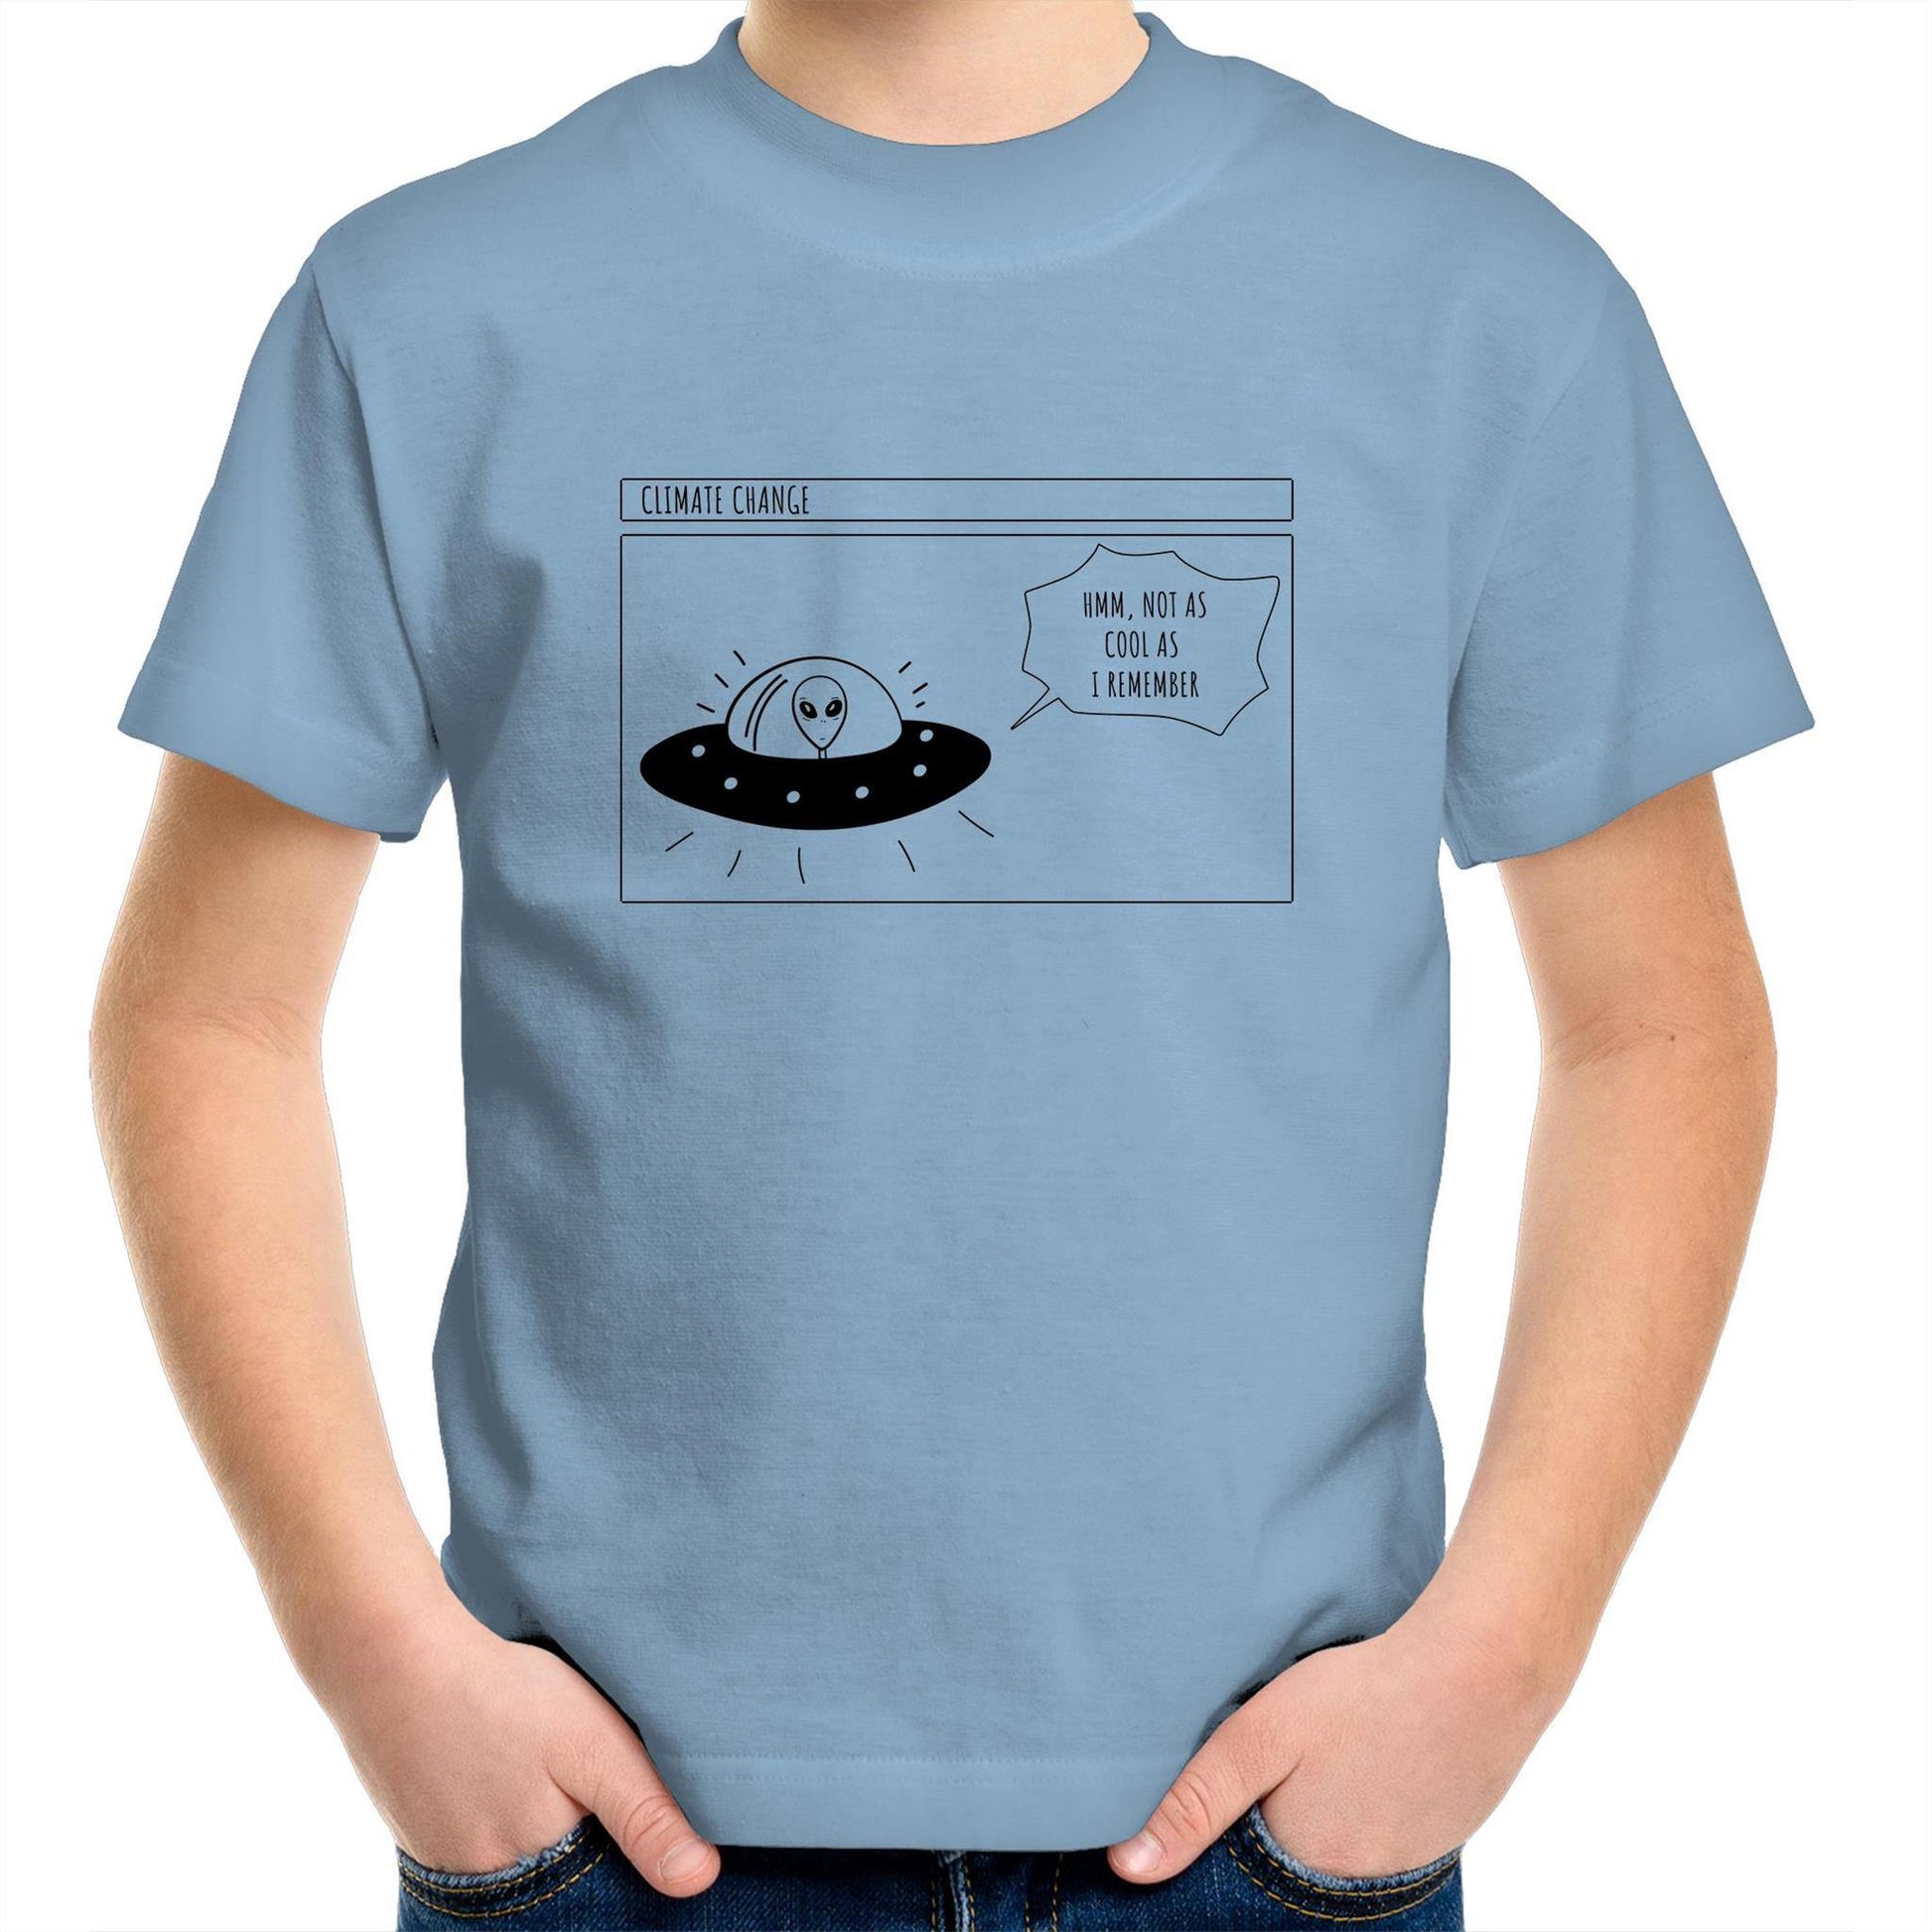 Alien Climate Change - Kids Youth Crew T-Shirt Carolina Blue Kids Youth T-shirt Environment Retro Sci Fi Space